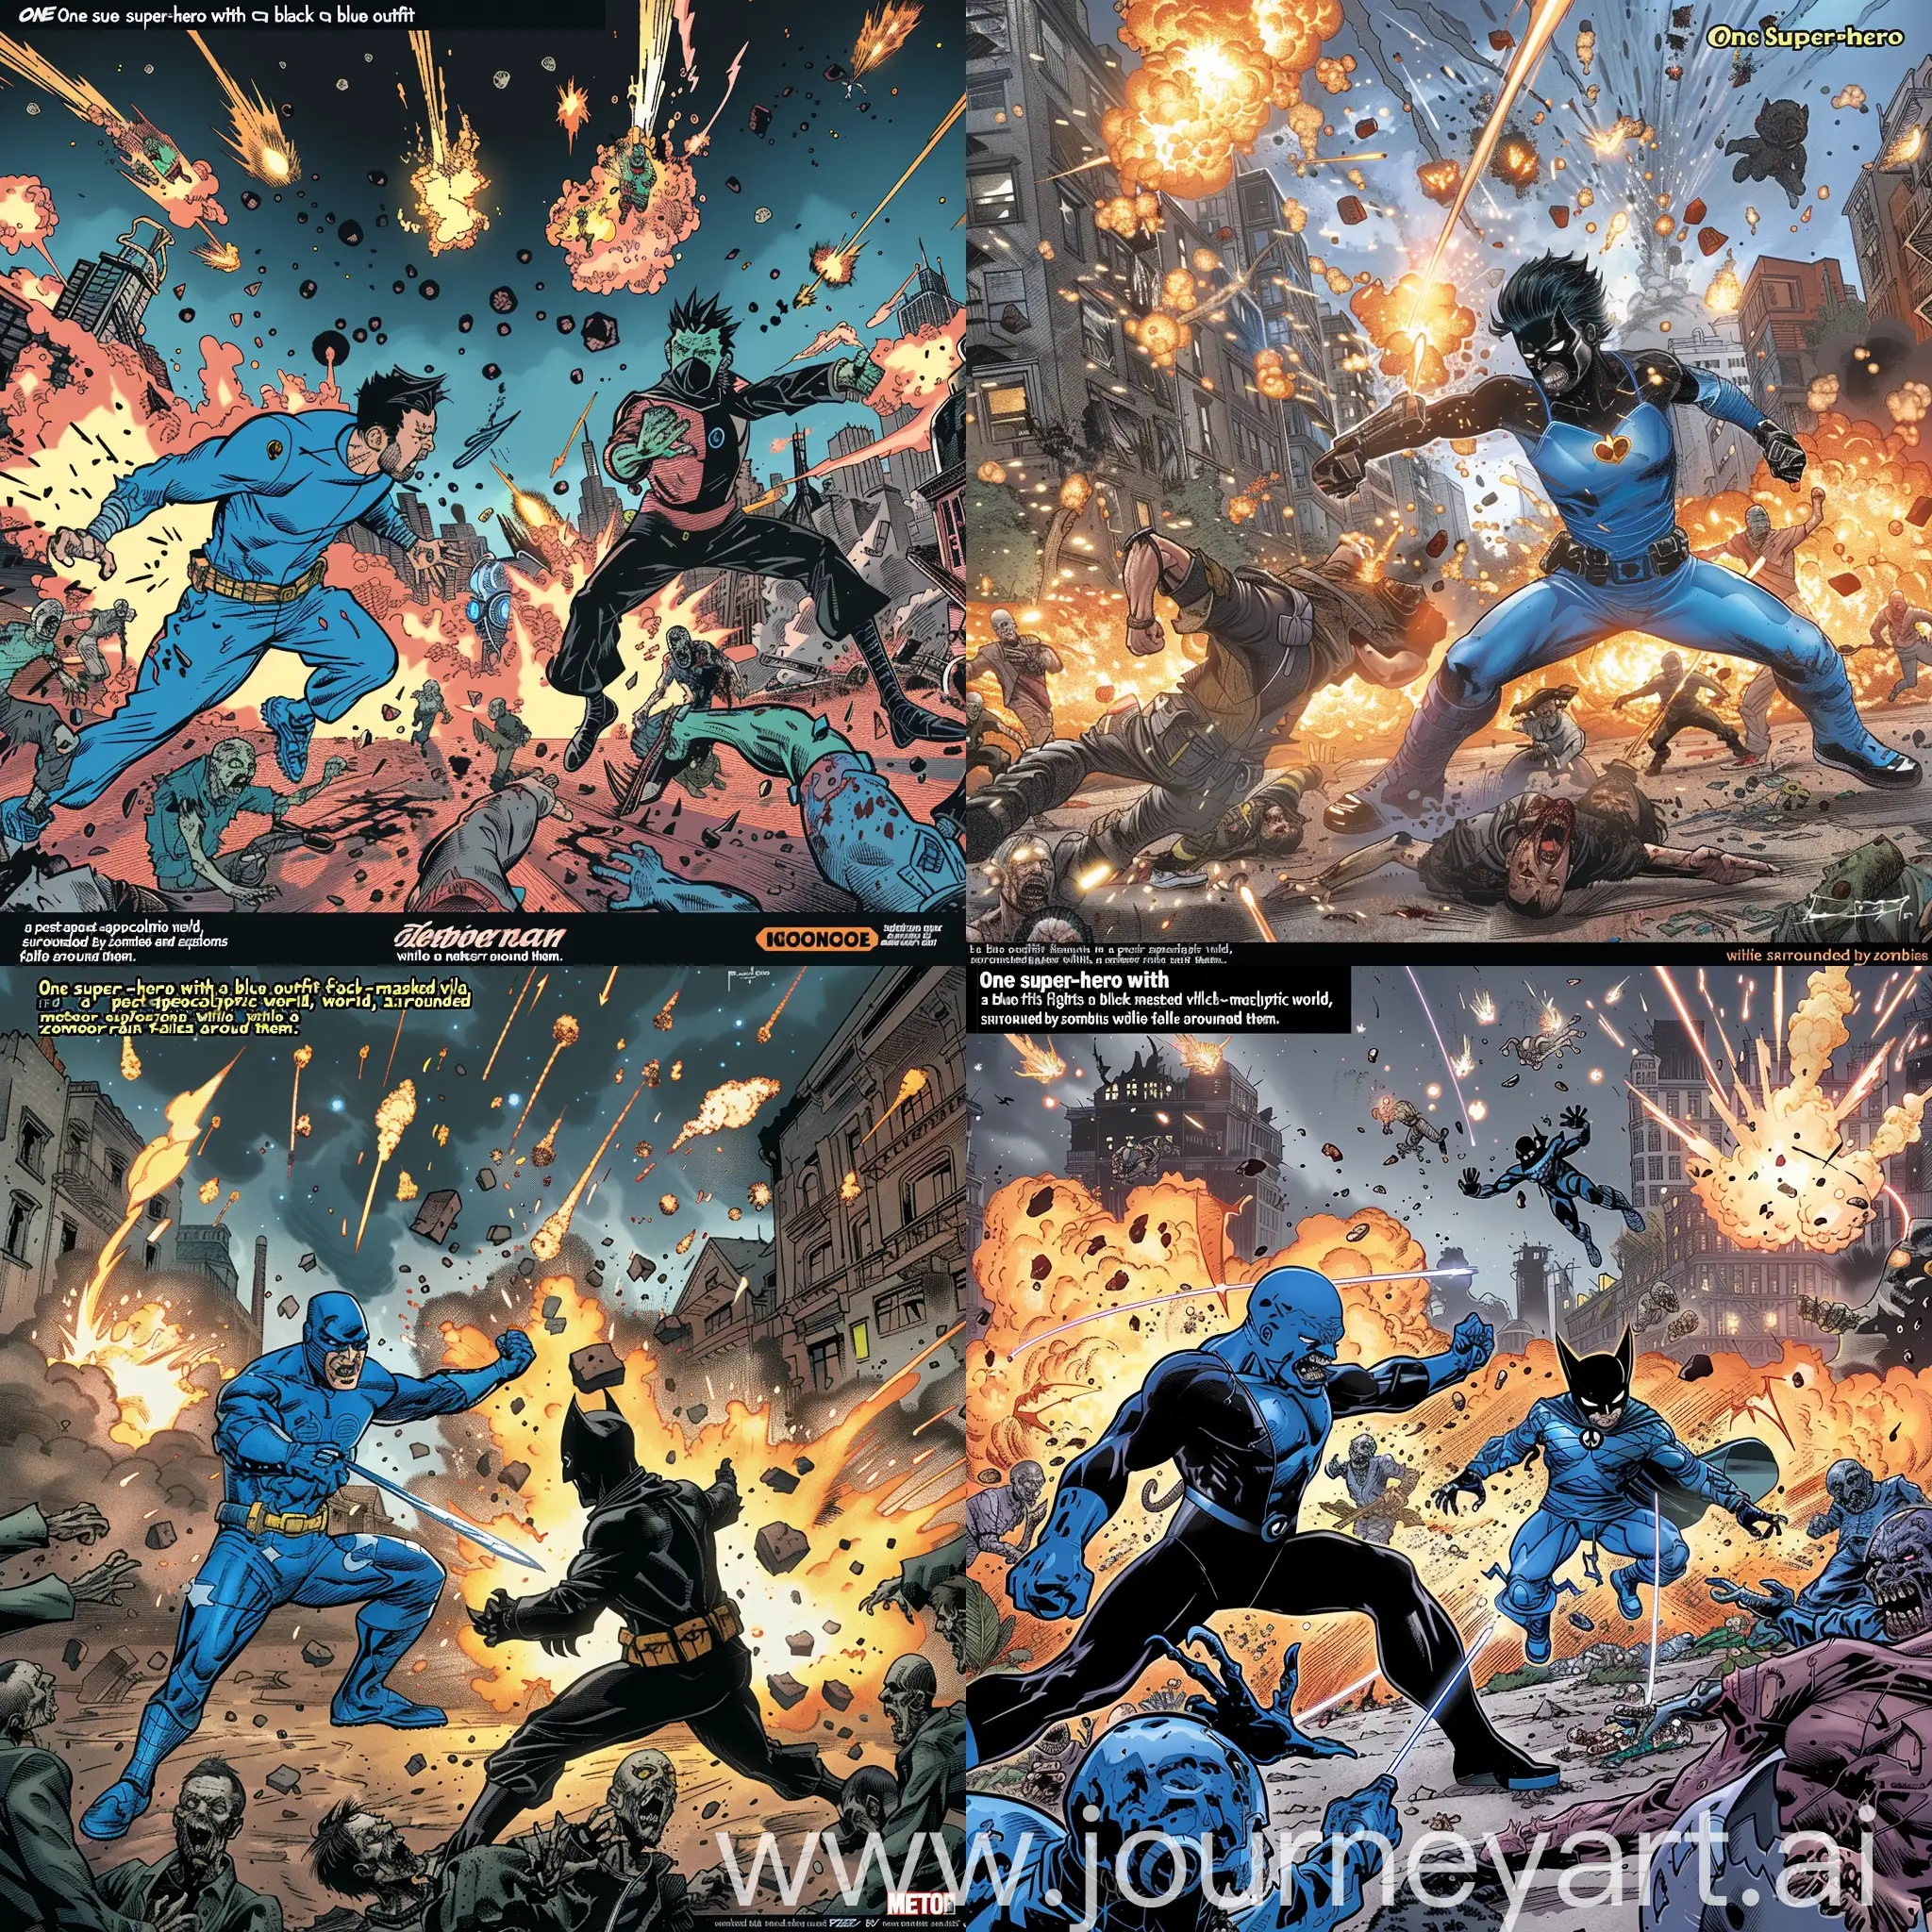 Epic-Battle-Blue-Superhero-Confronts-BlackMasked-Villain-in-PostApocalyptic-Chaos